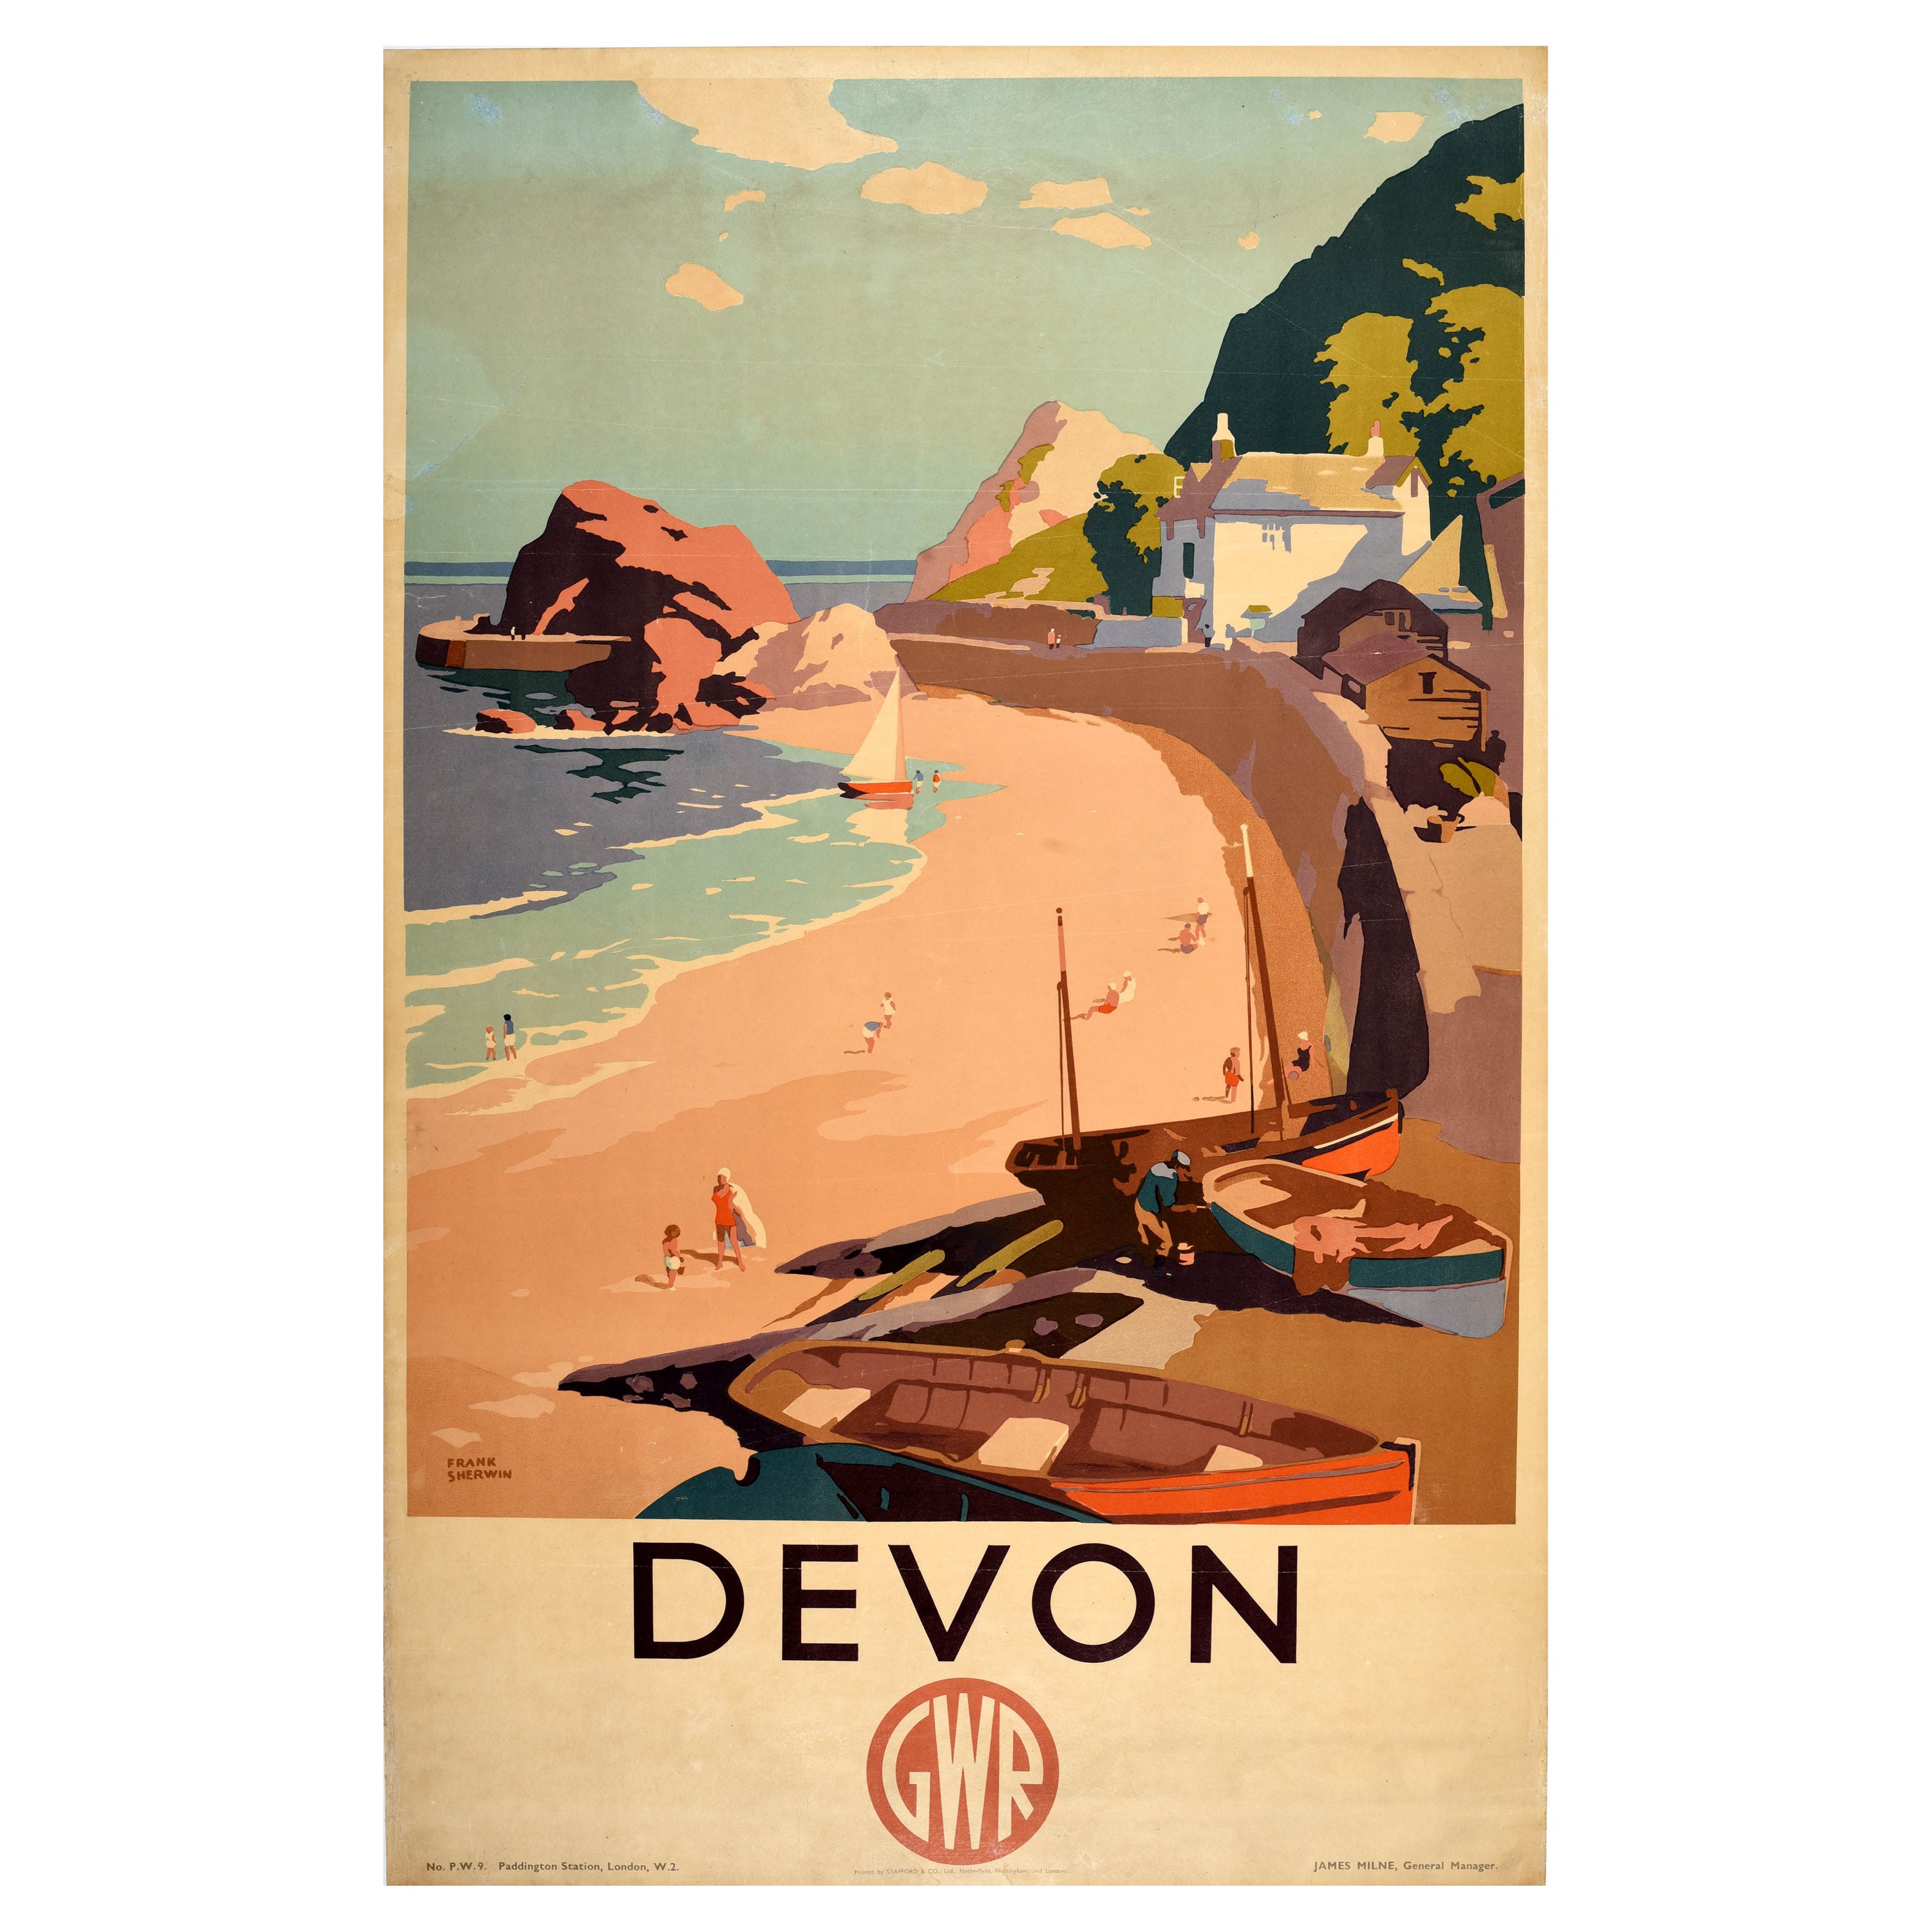 Original Vintage Travel Poster Devon GWR Frank Sherwin Great Western Railway UK For Sale